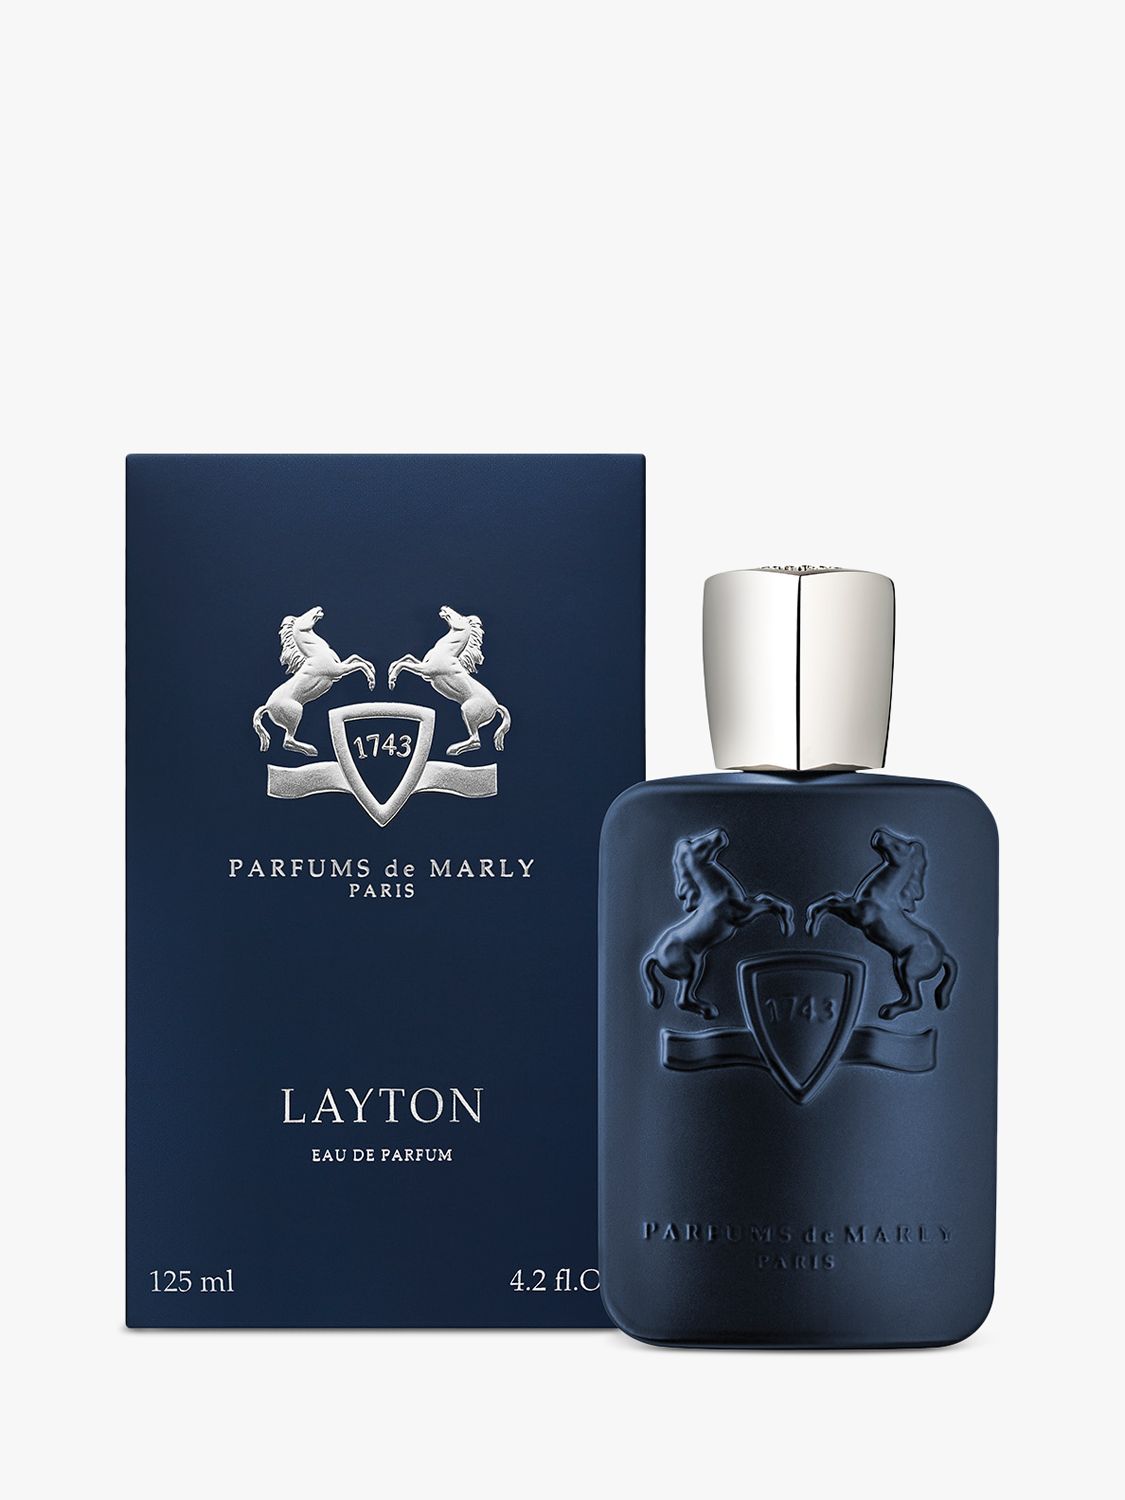 Parfums de Marly Layton Eau de Parfum, 125ml at John Lewis &